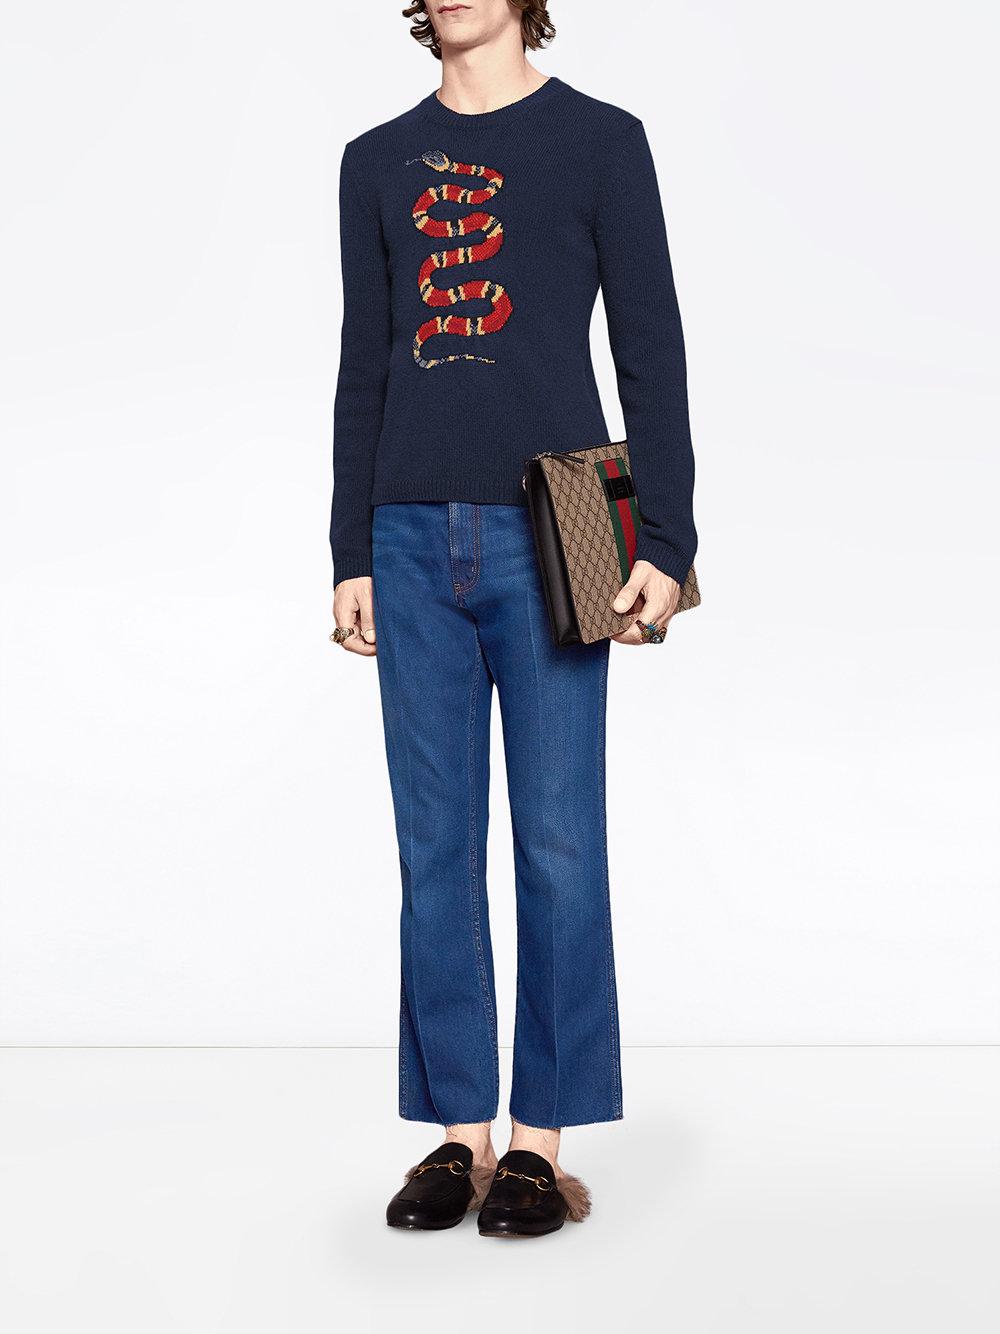 Gucci Wool Kingsnake Jacquard Sweater in Blue for Men - Lyst